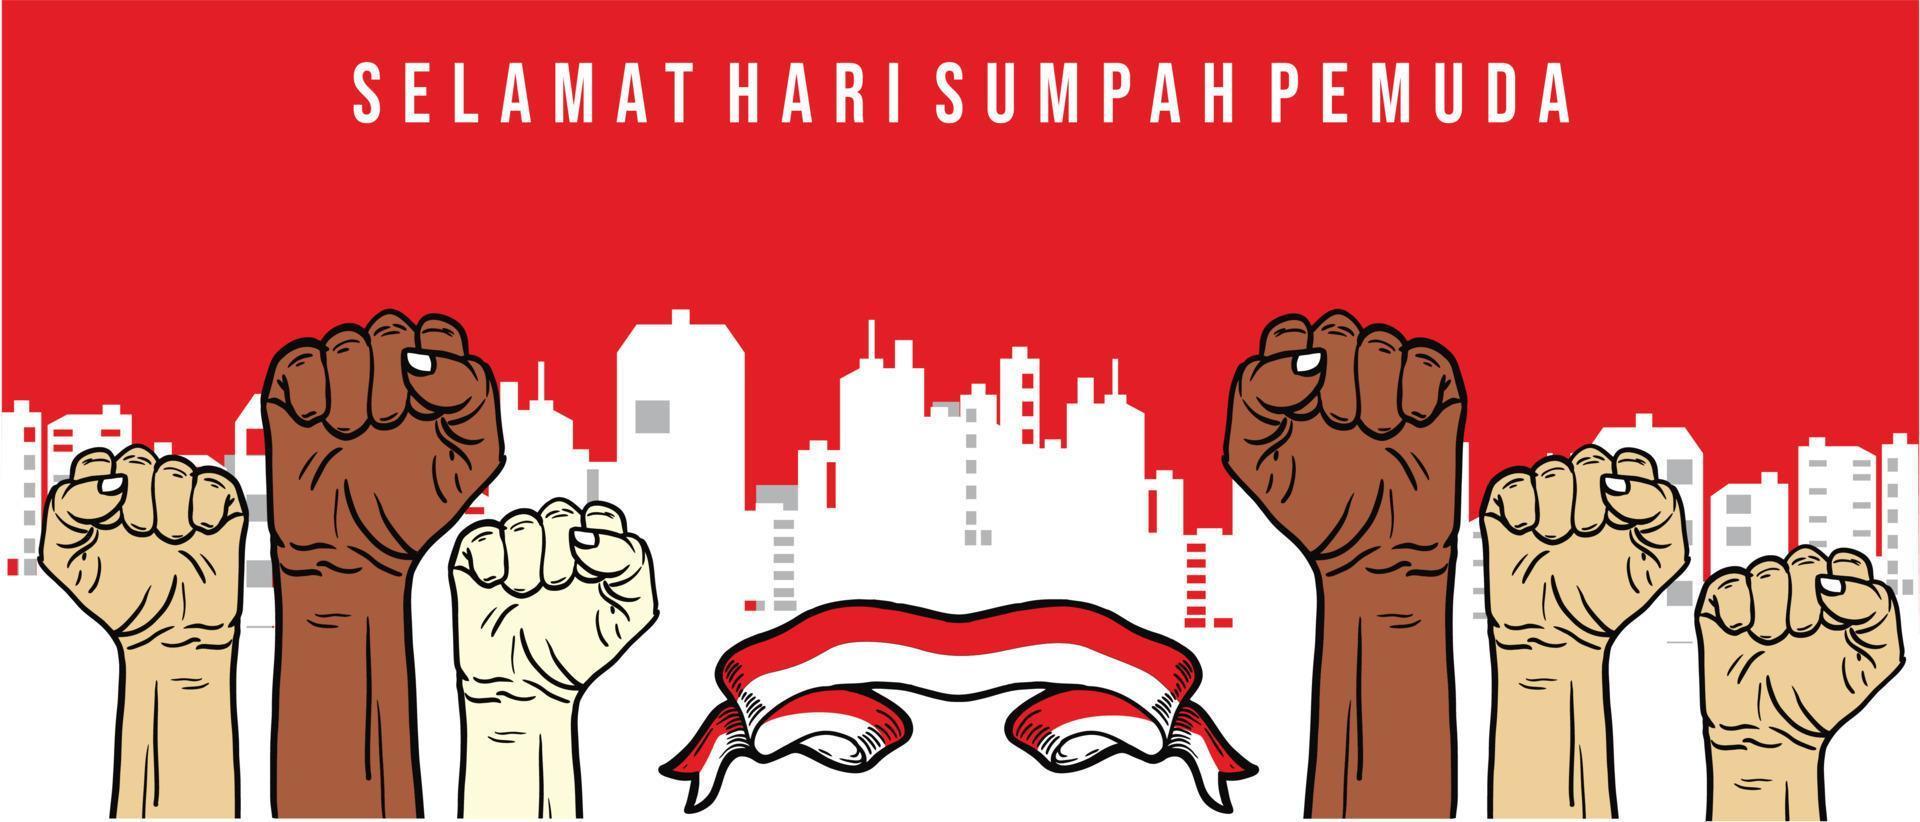 hari sumpah pemuda, 28 oktober vertaling oktober 28 gelukkig dag jeugd belofte van Indonesië vector illustratie.